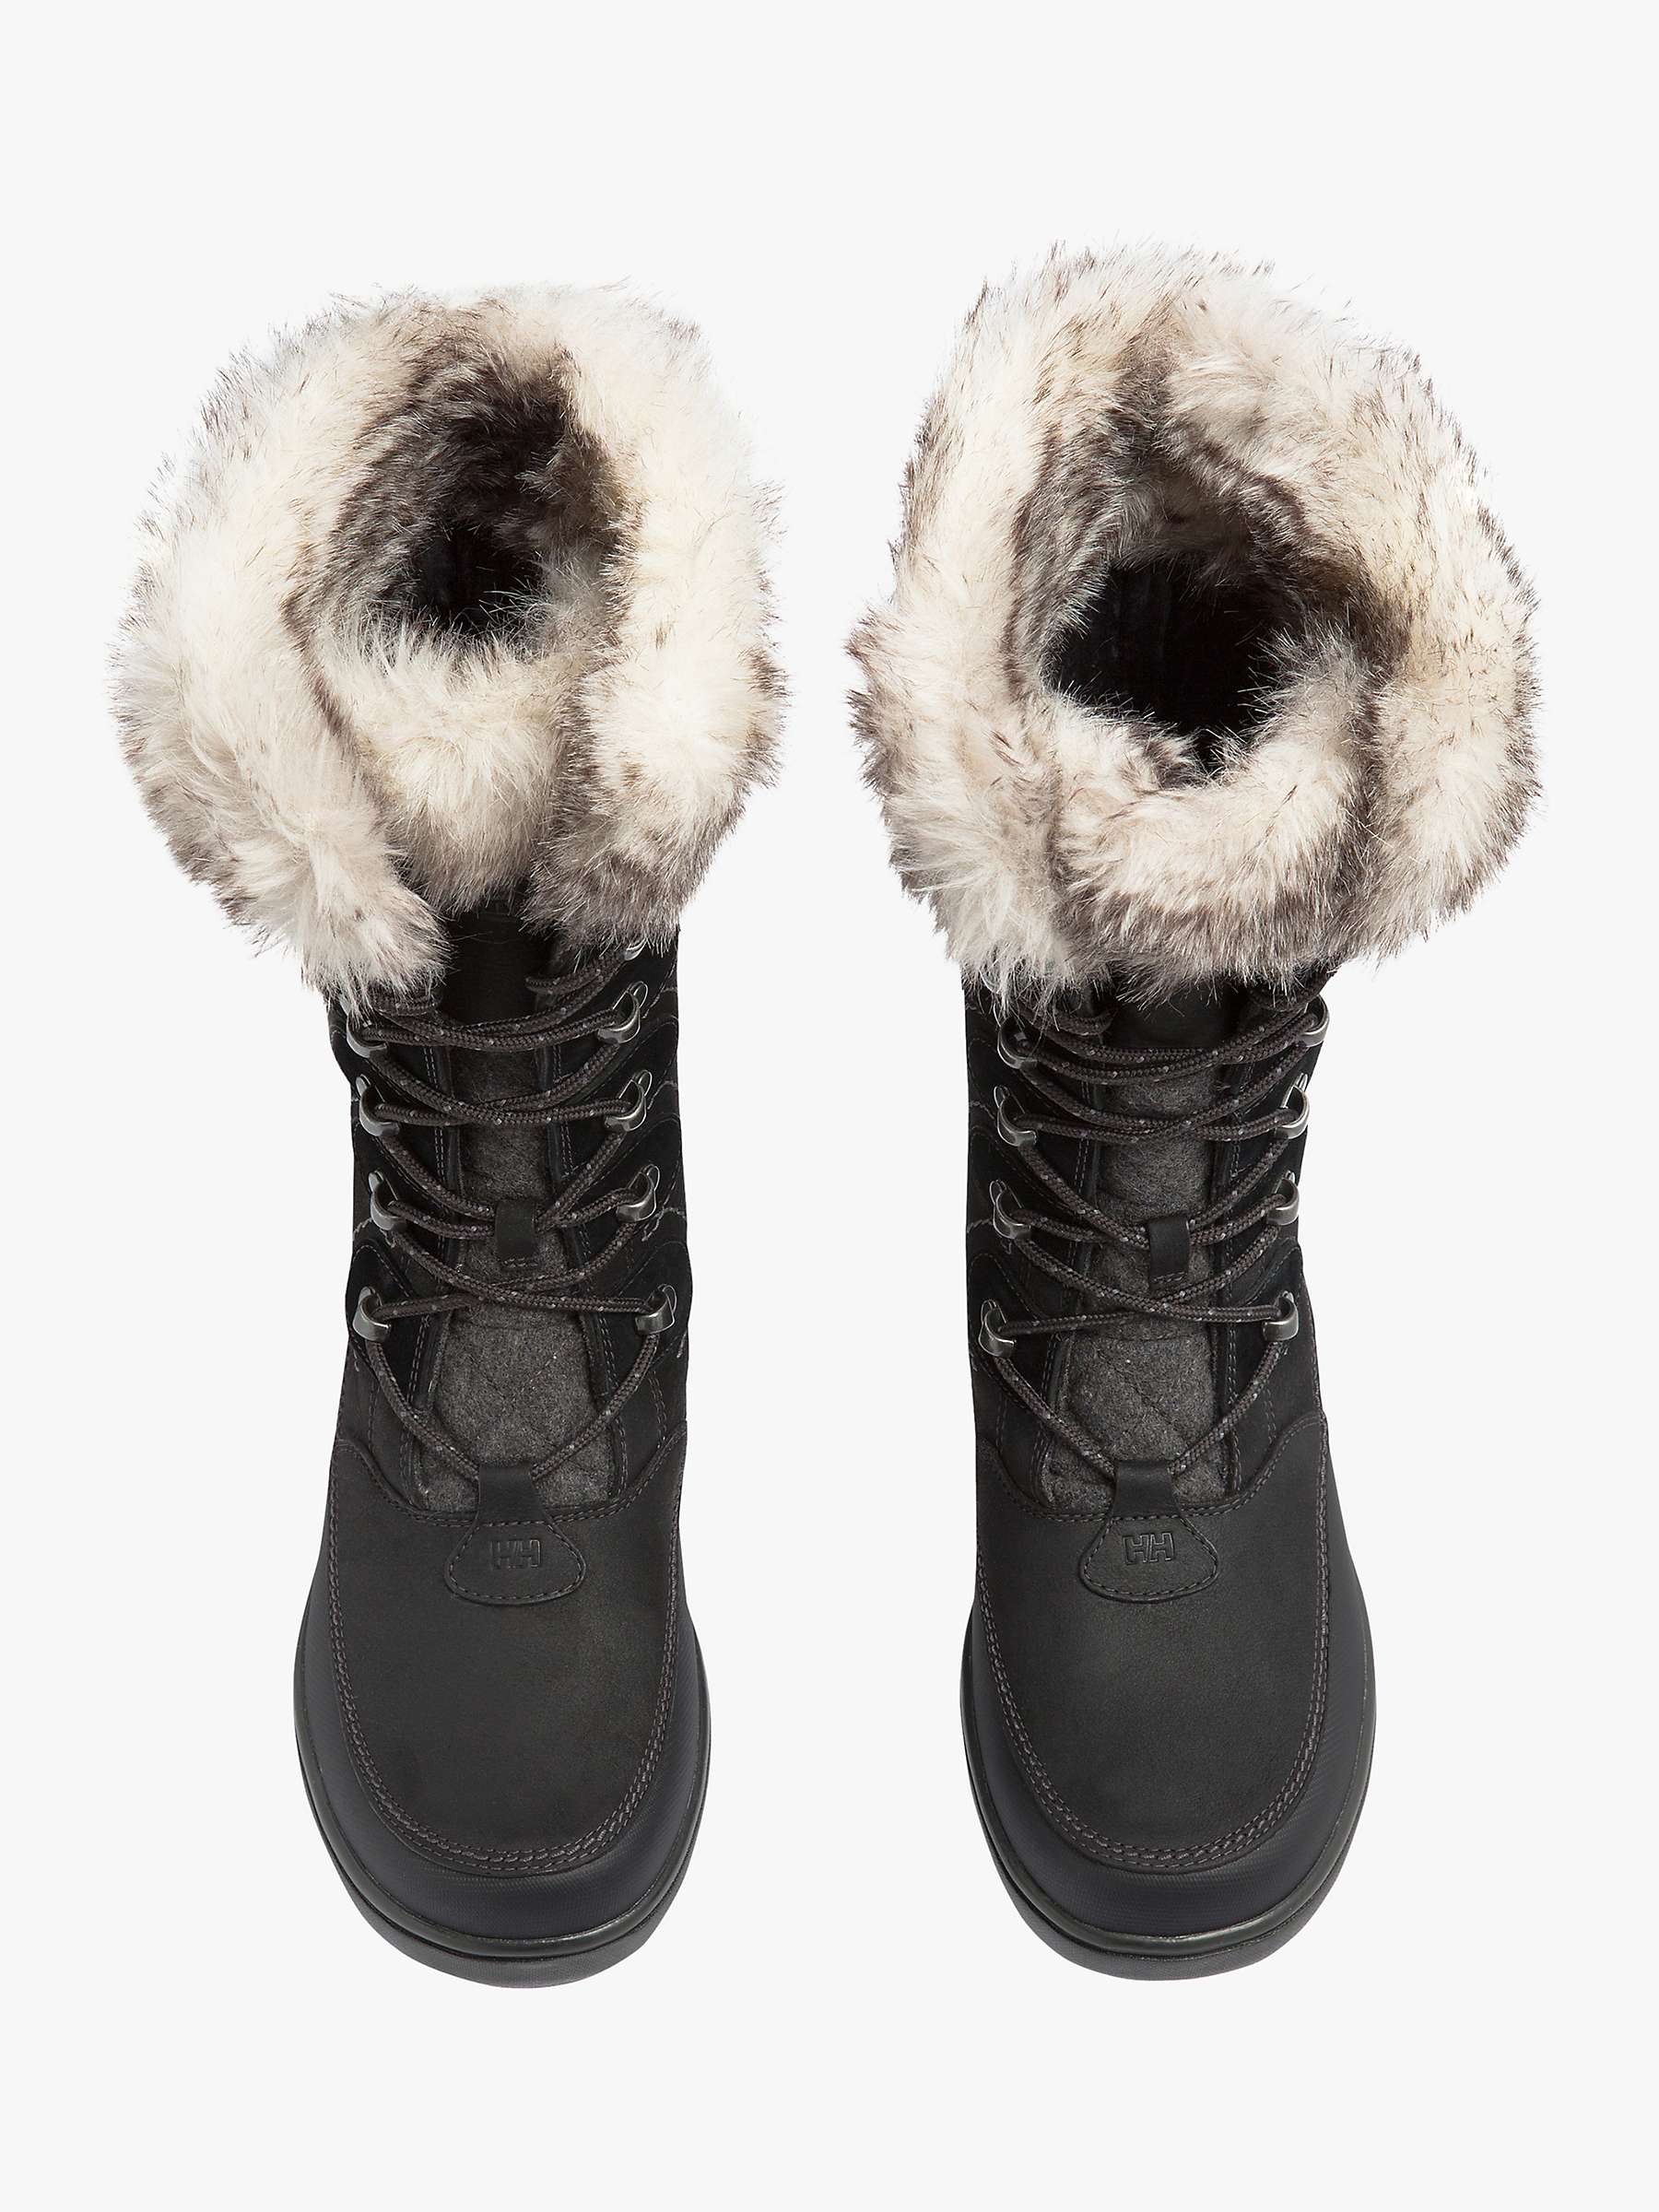 Buy Helly Hansen Garibaldi VL Women's Snow Boots Online at johnlewis.com